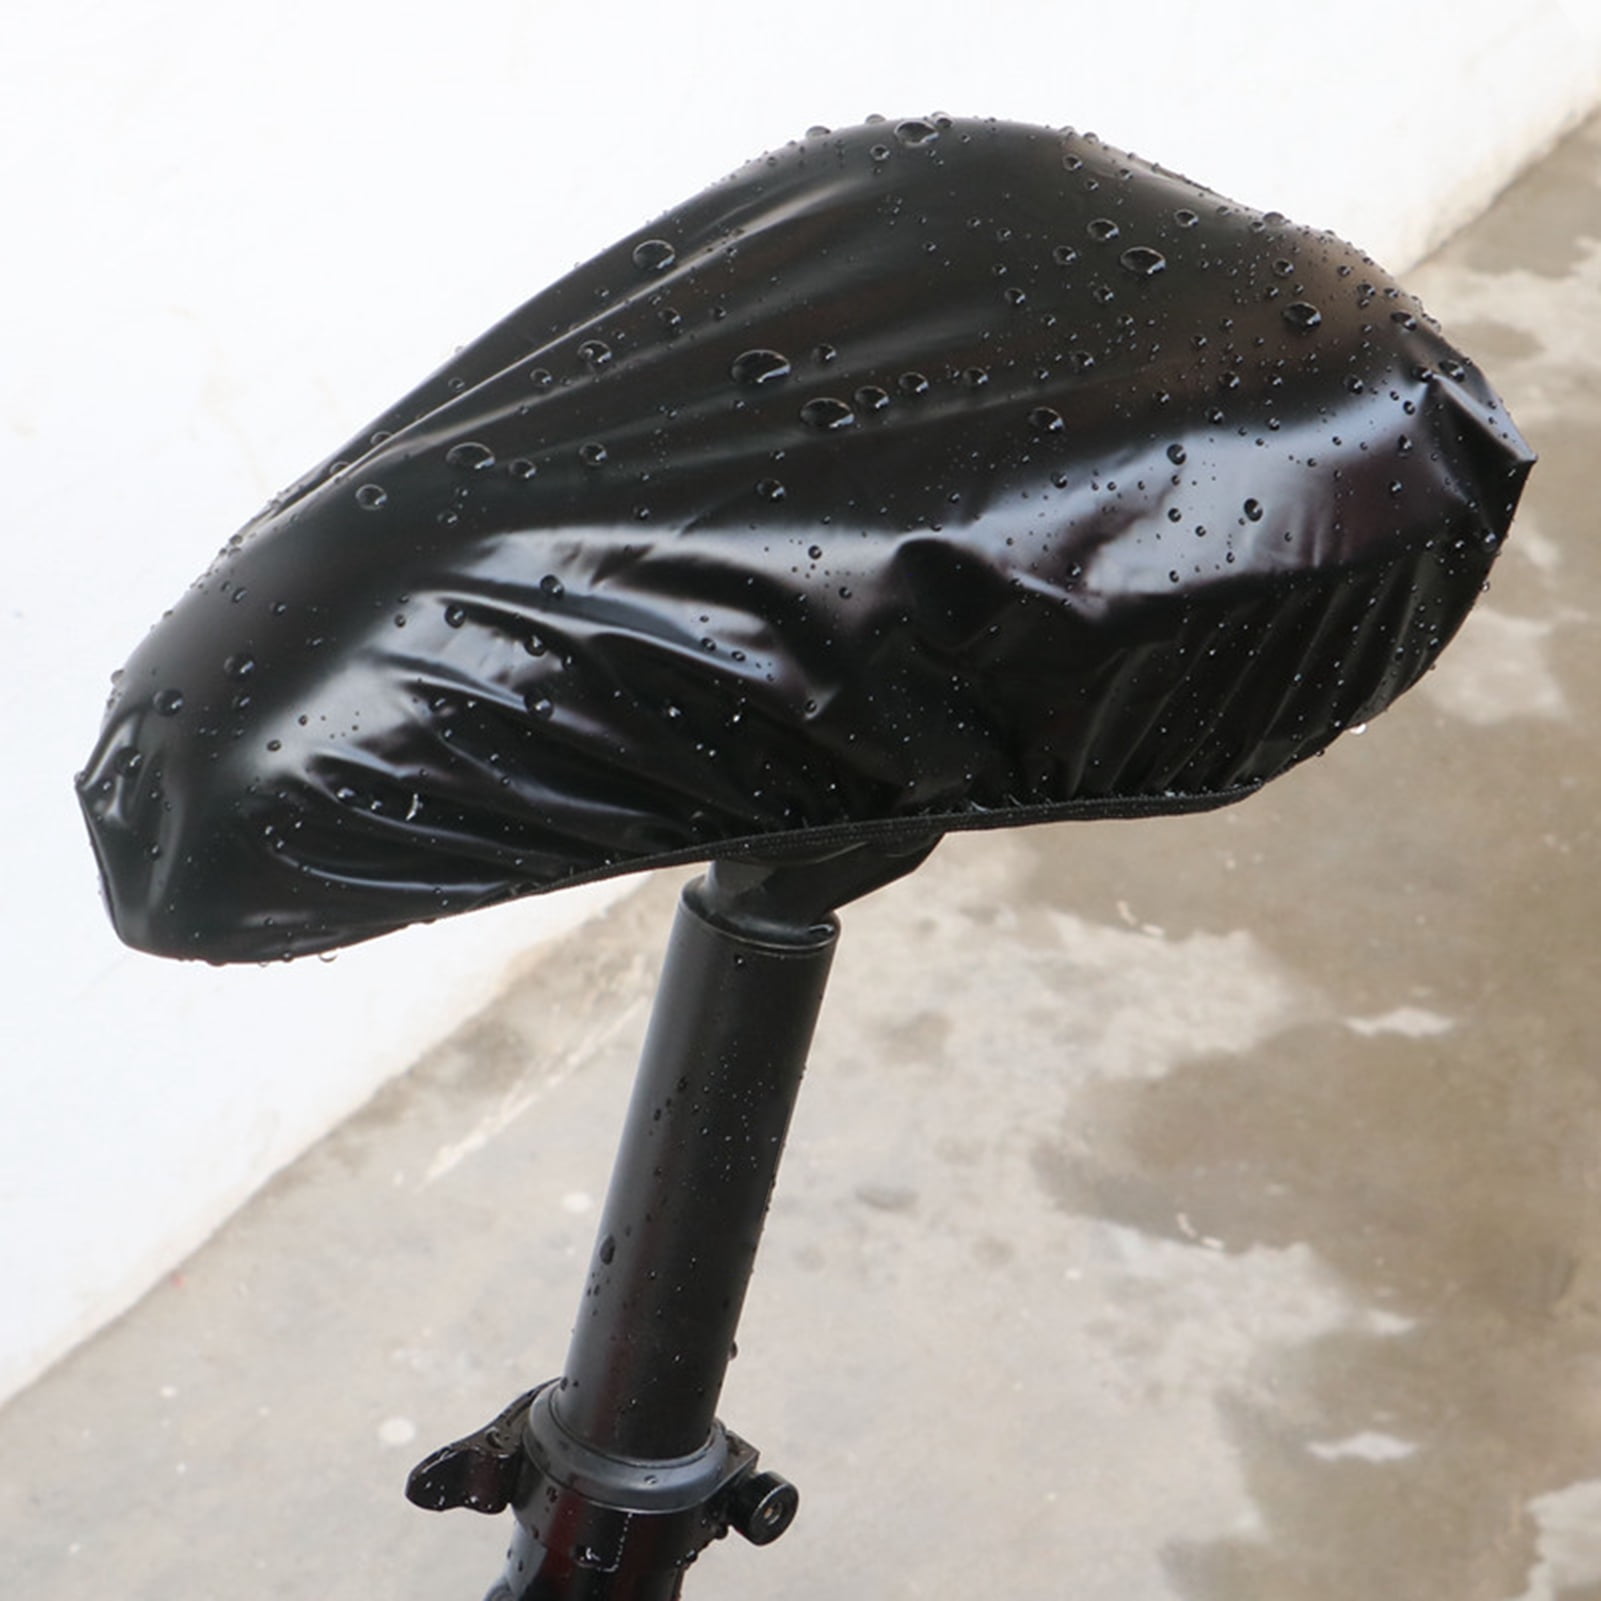 Bicycle Seat Waterproof Rain Protection and dust poet 2019 fahrradsattelüb L0Z1 